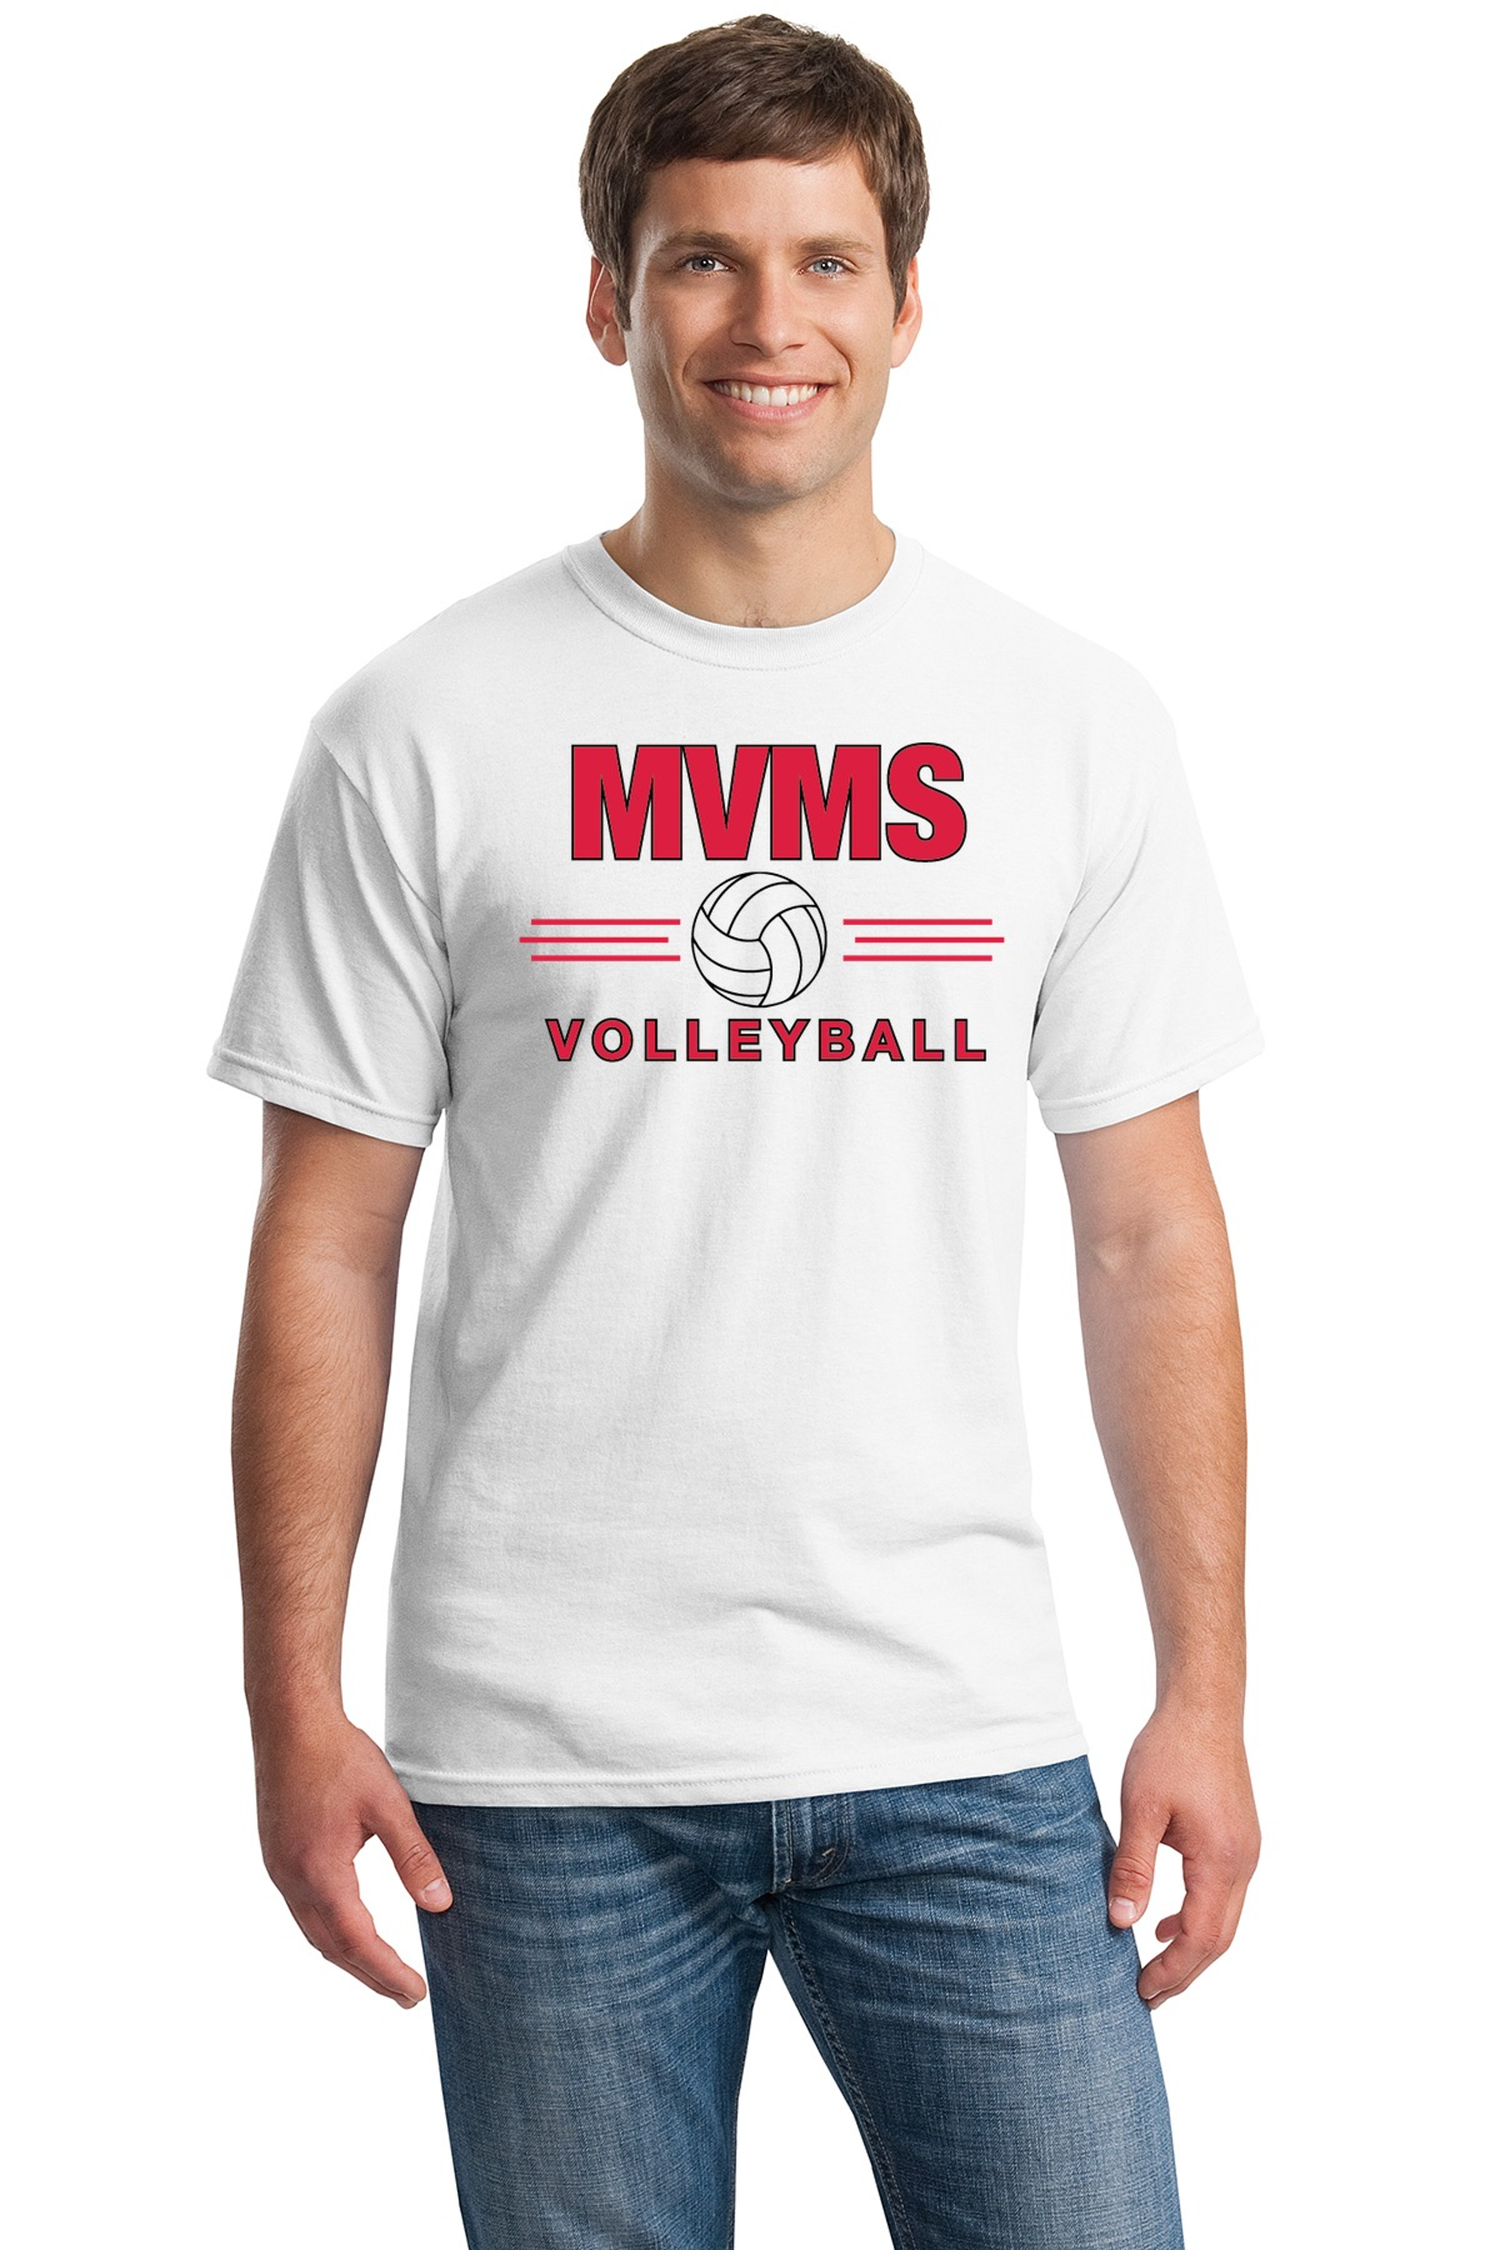 MVMS Volleyball Heavy Cotton Tee Shirt